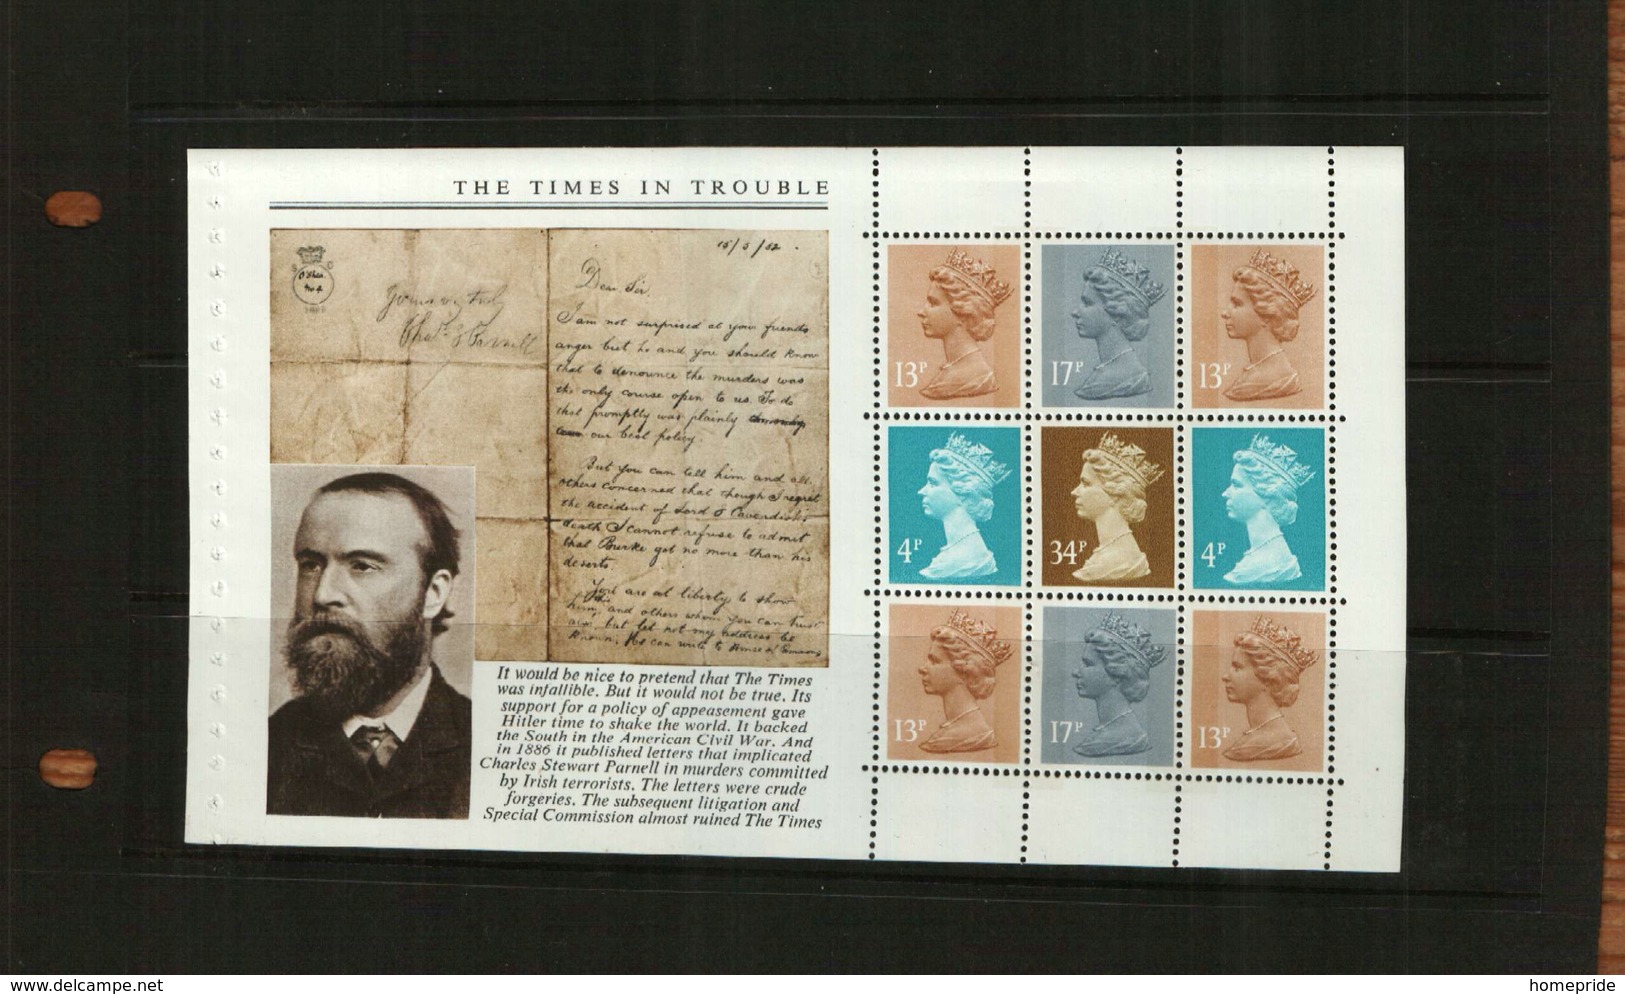 GREAT BRITAIN - QEII - 1985 BOOKLET PANE -  - 9 Stamps - Unused Stamps